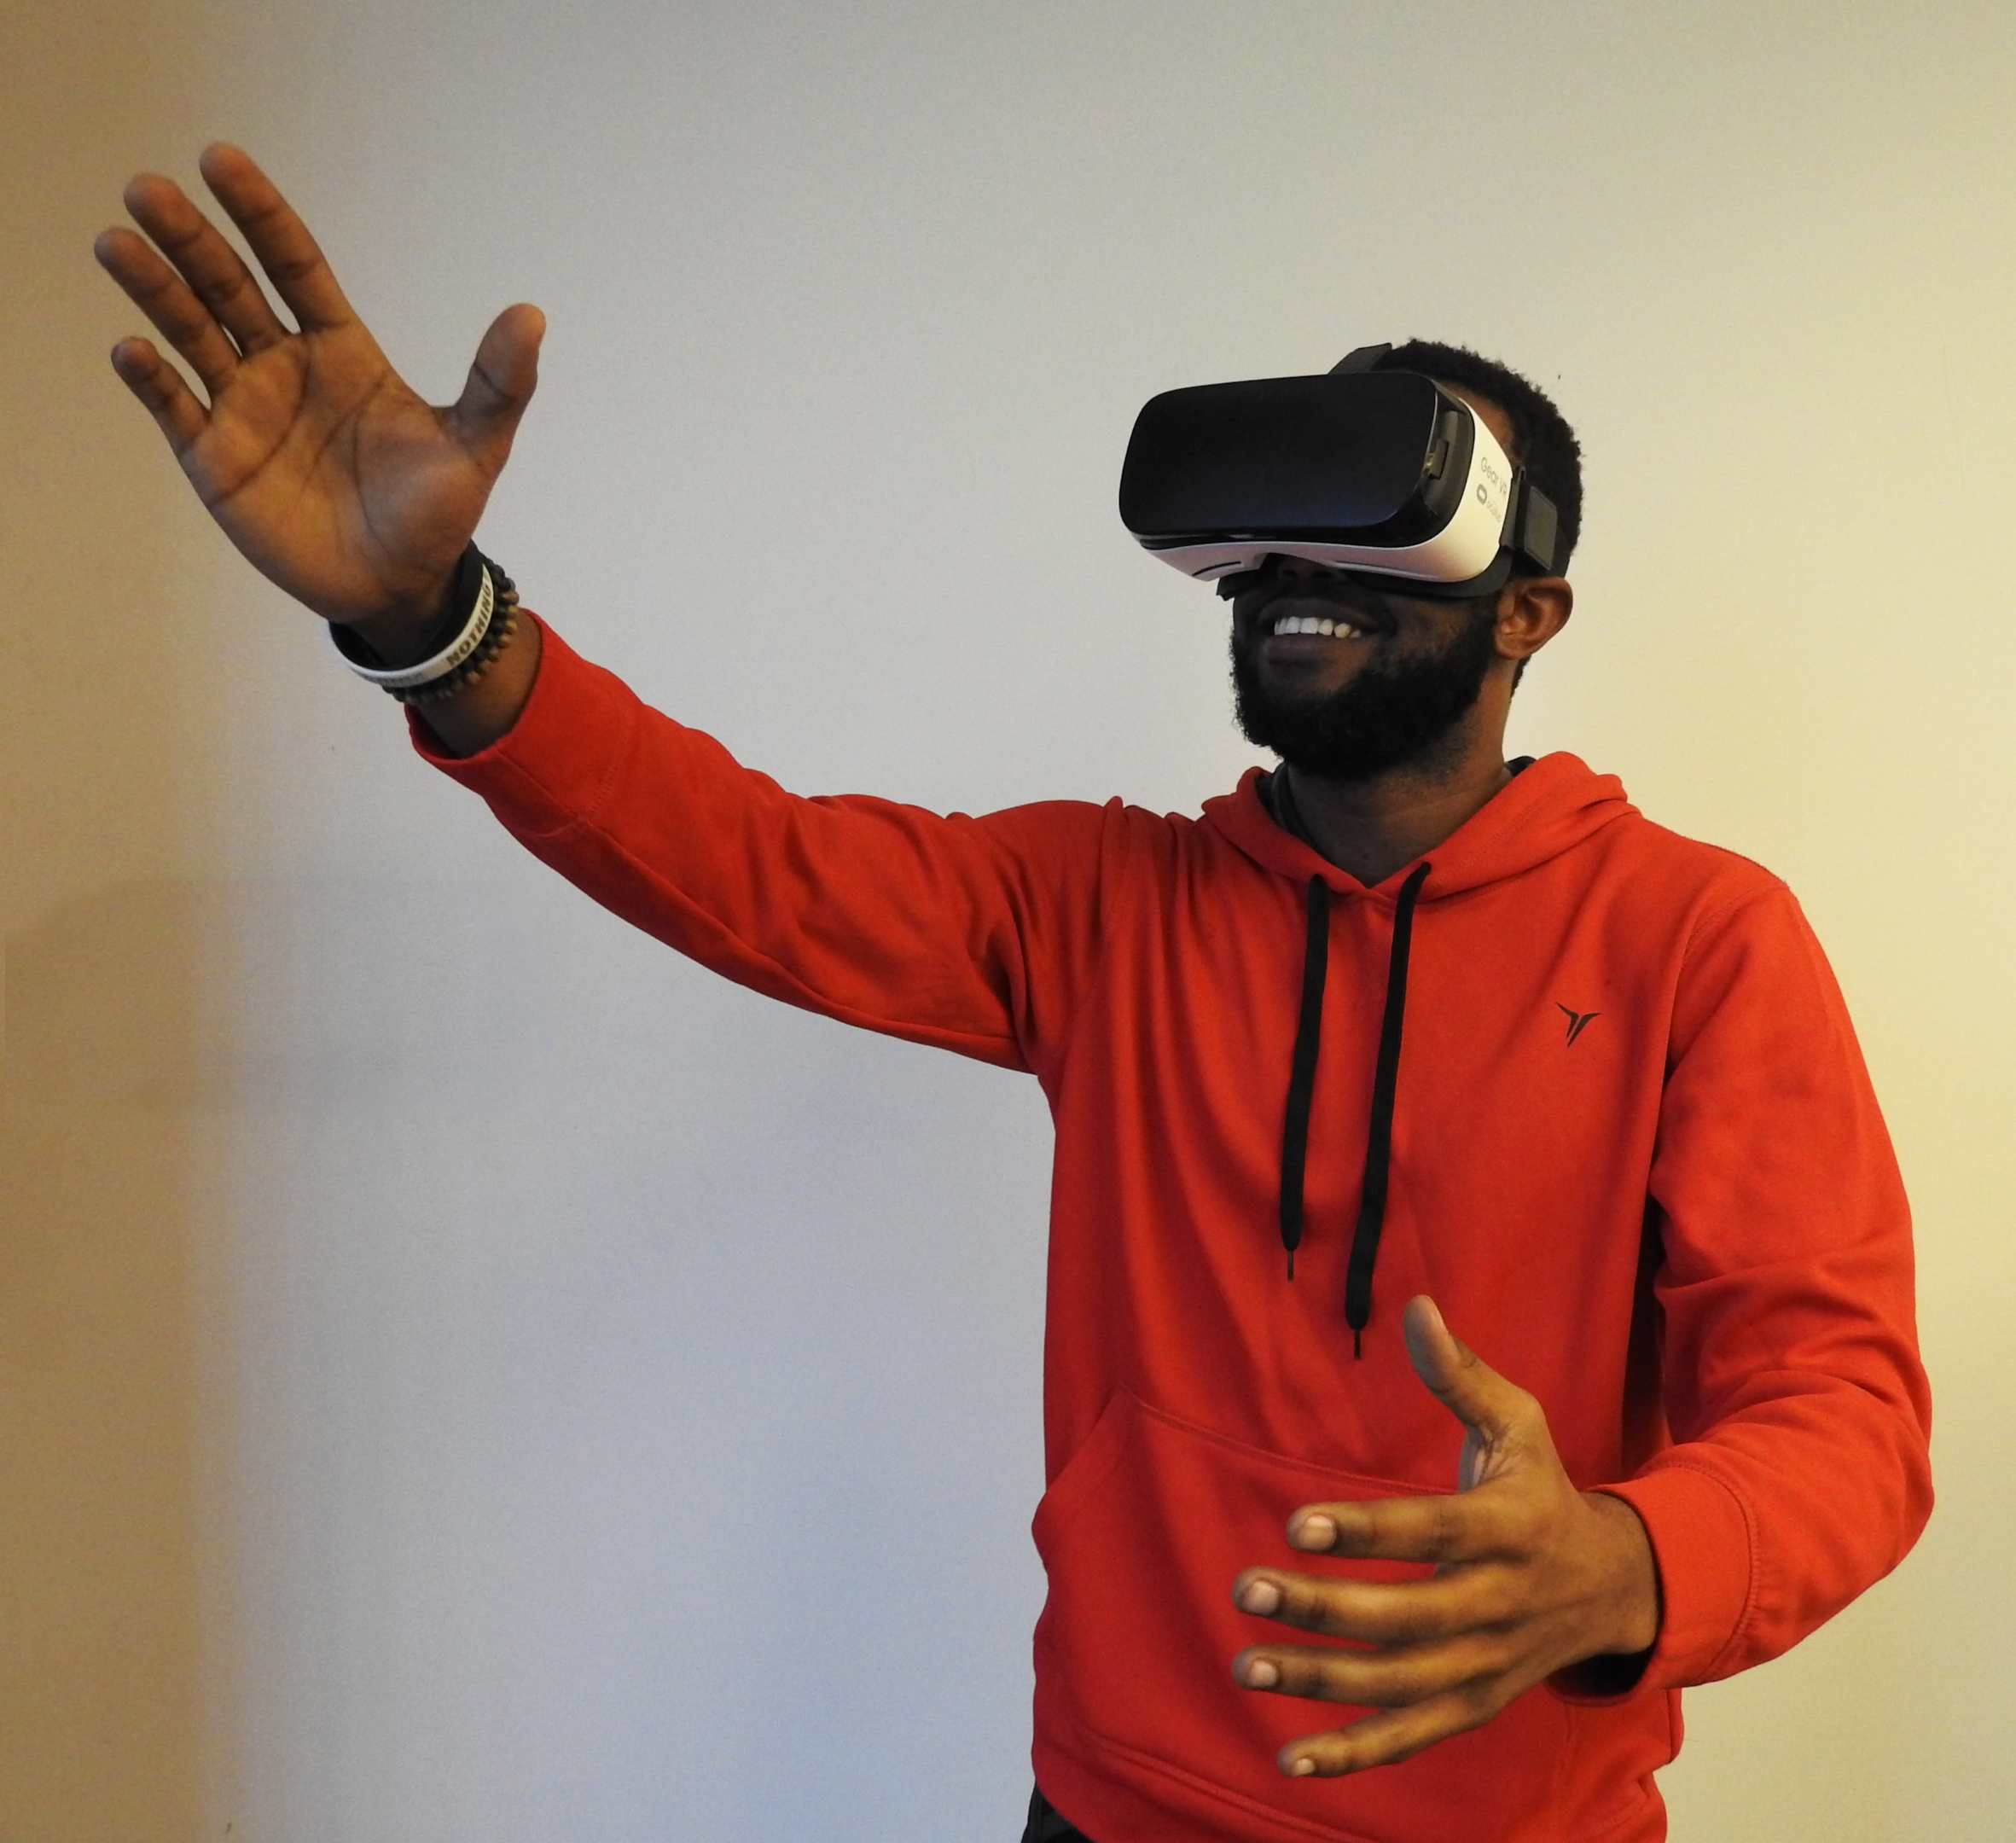 Interaction using virtual reality